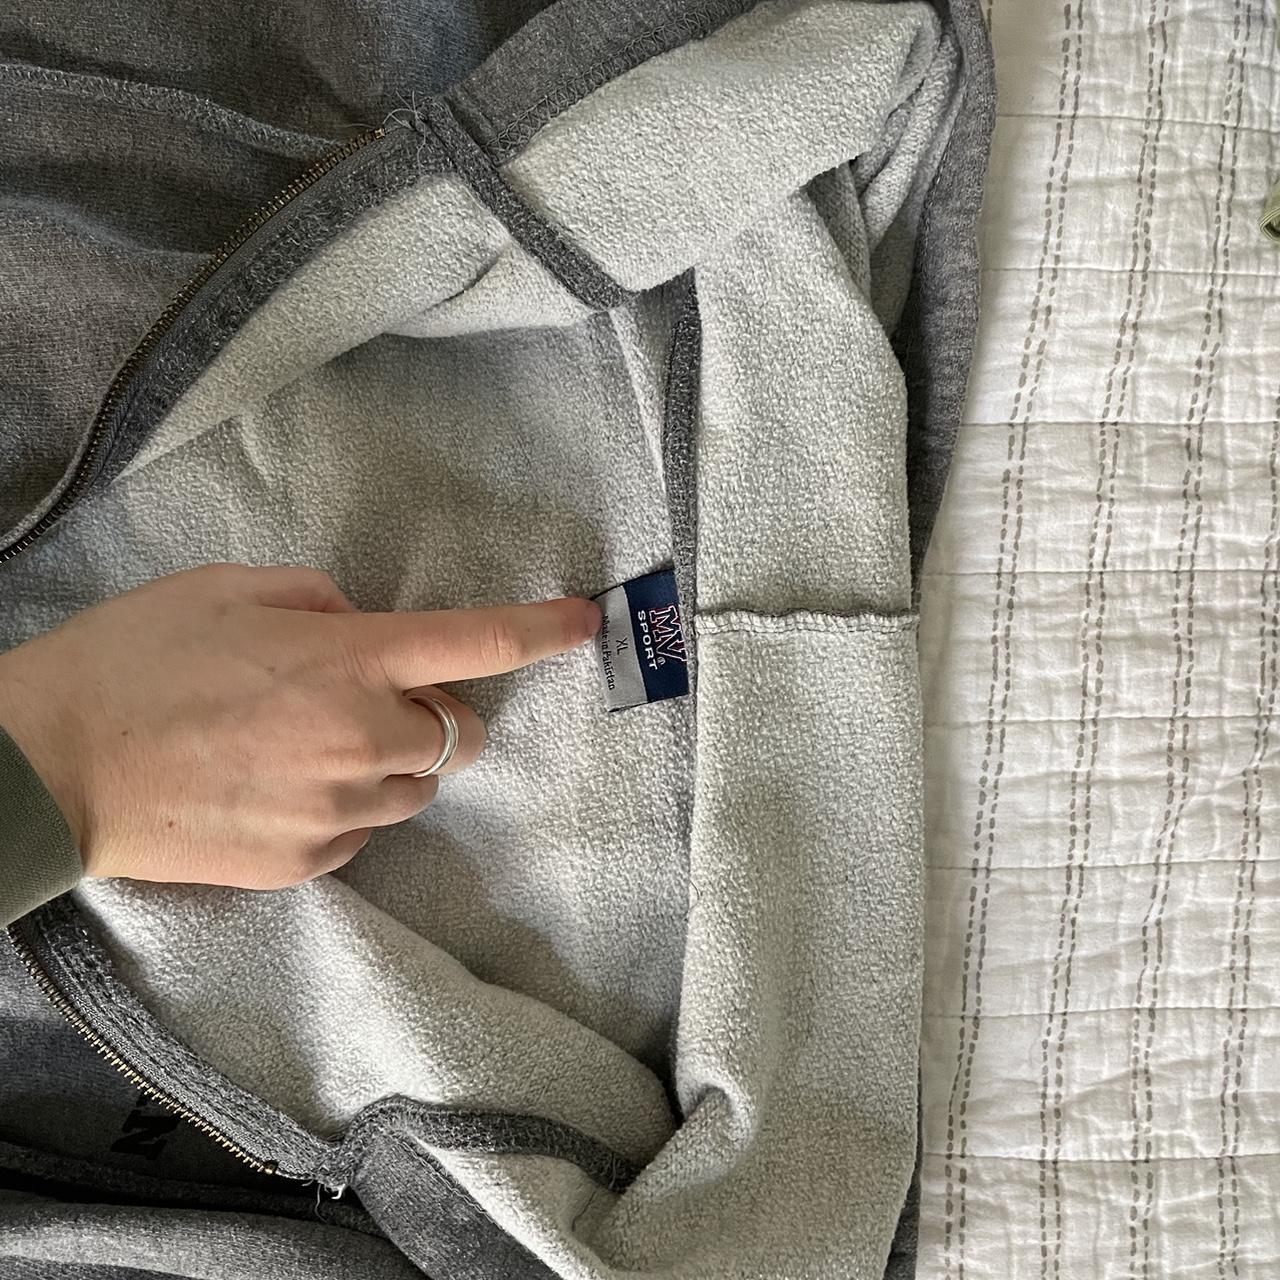 Bowdoin Track Pant from Adidas – The Bowdoin Store